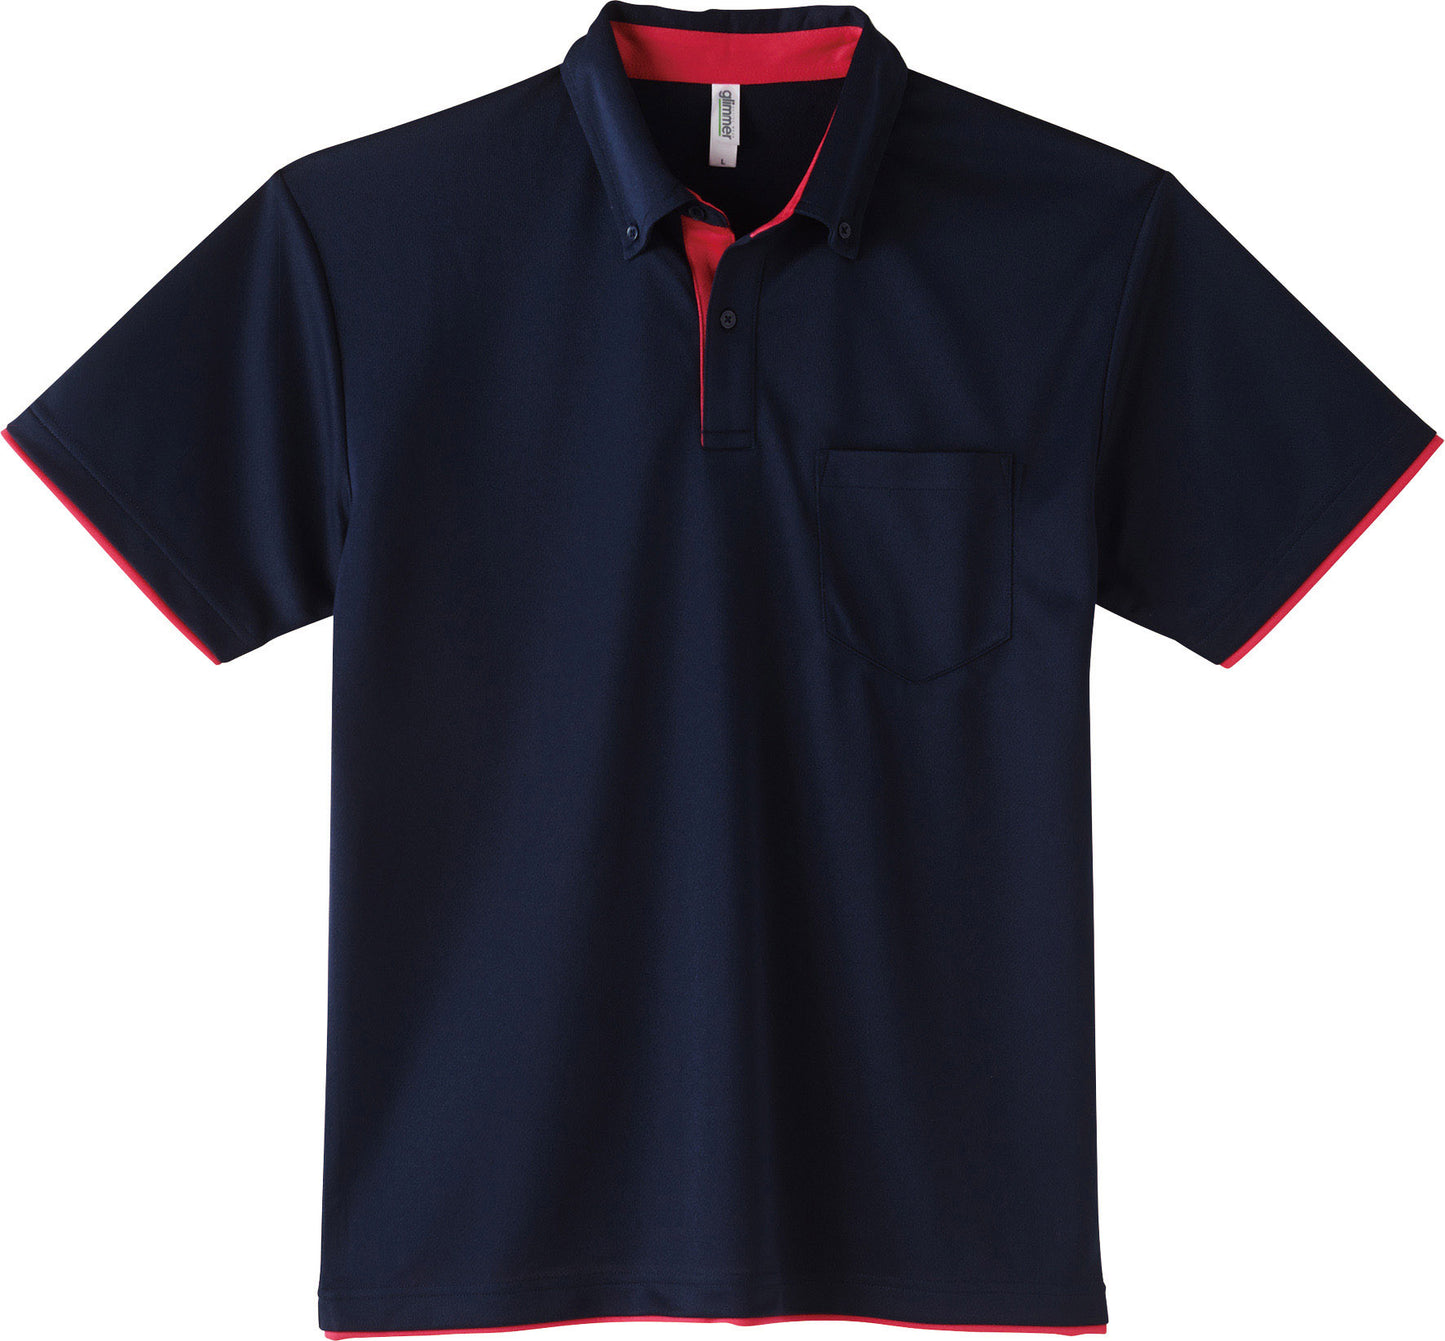 [Plus-1] 315-AYB 4.4oz Dry Layered Bota Polo Shirt